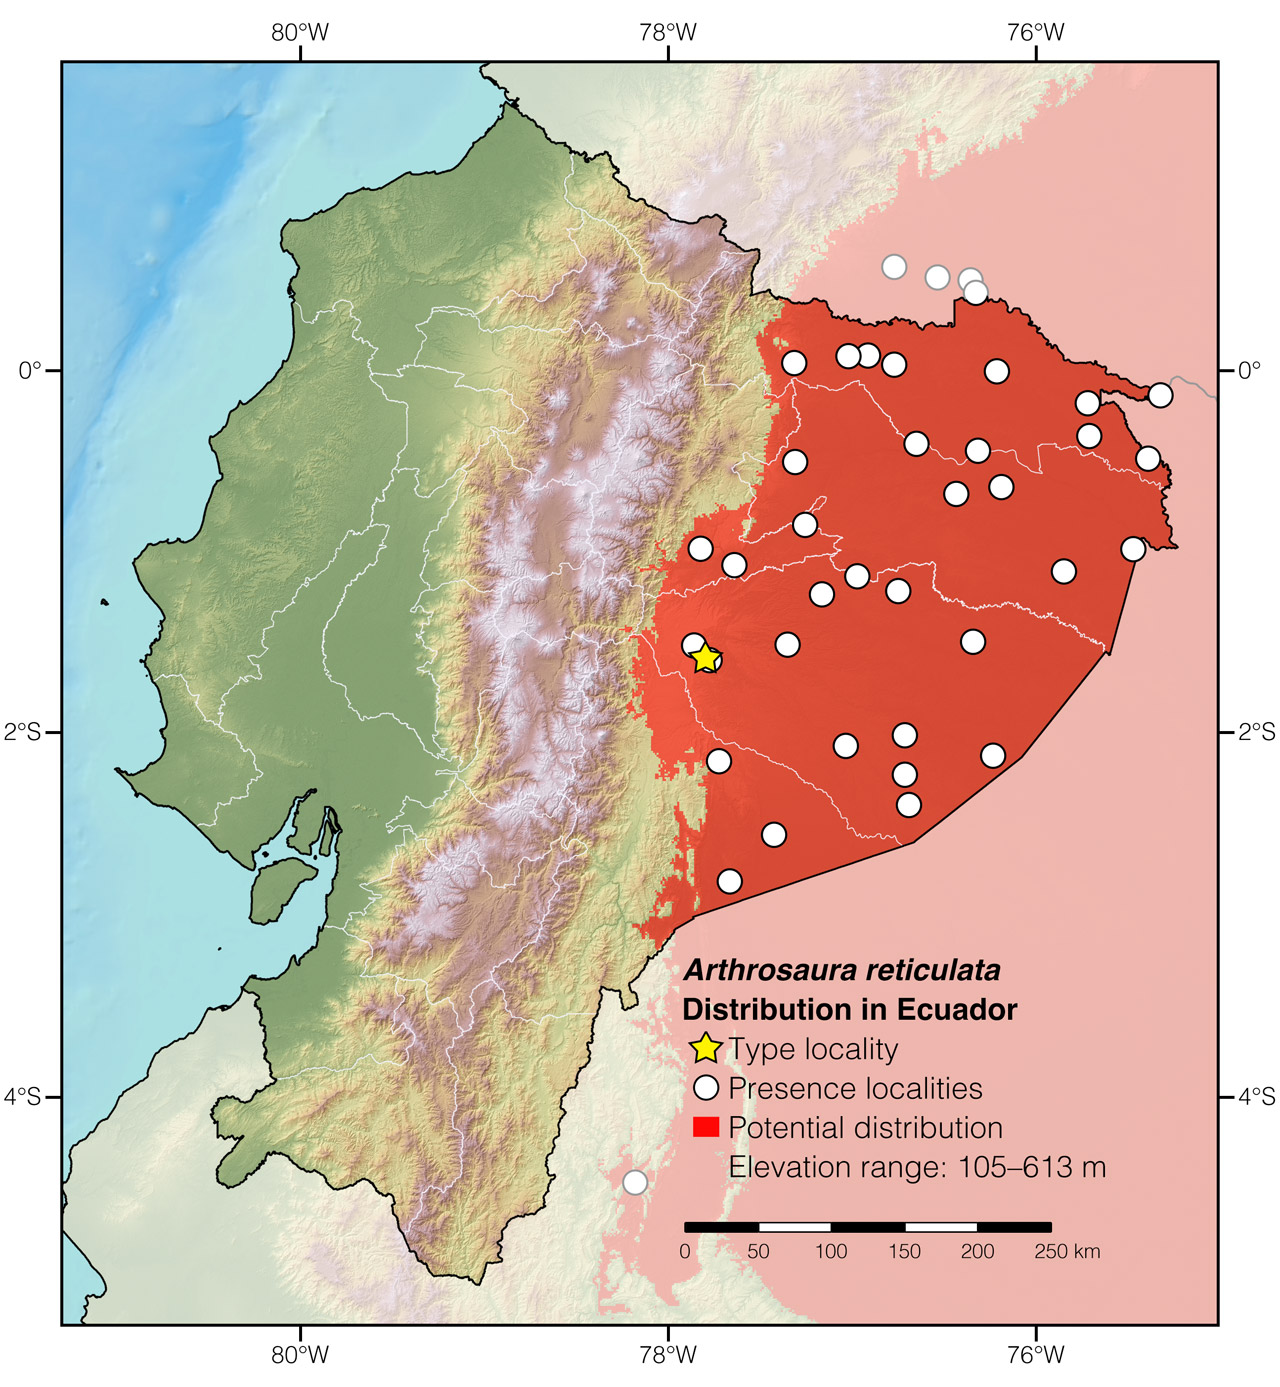 Distribution of Arthrosaura reticulata in Ecuador